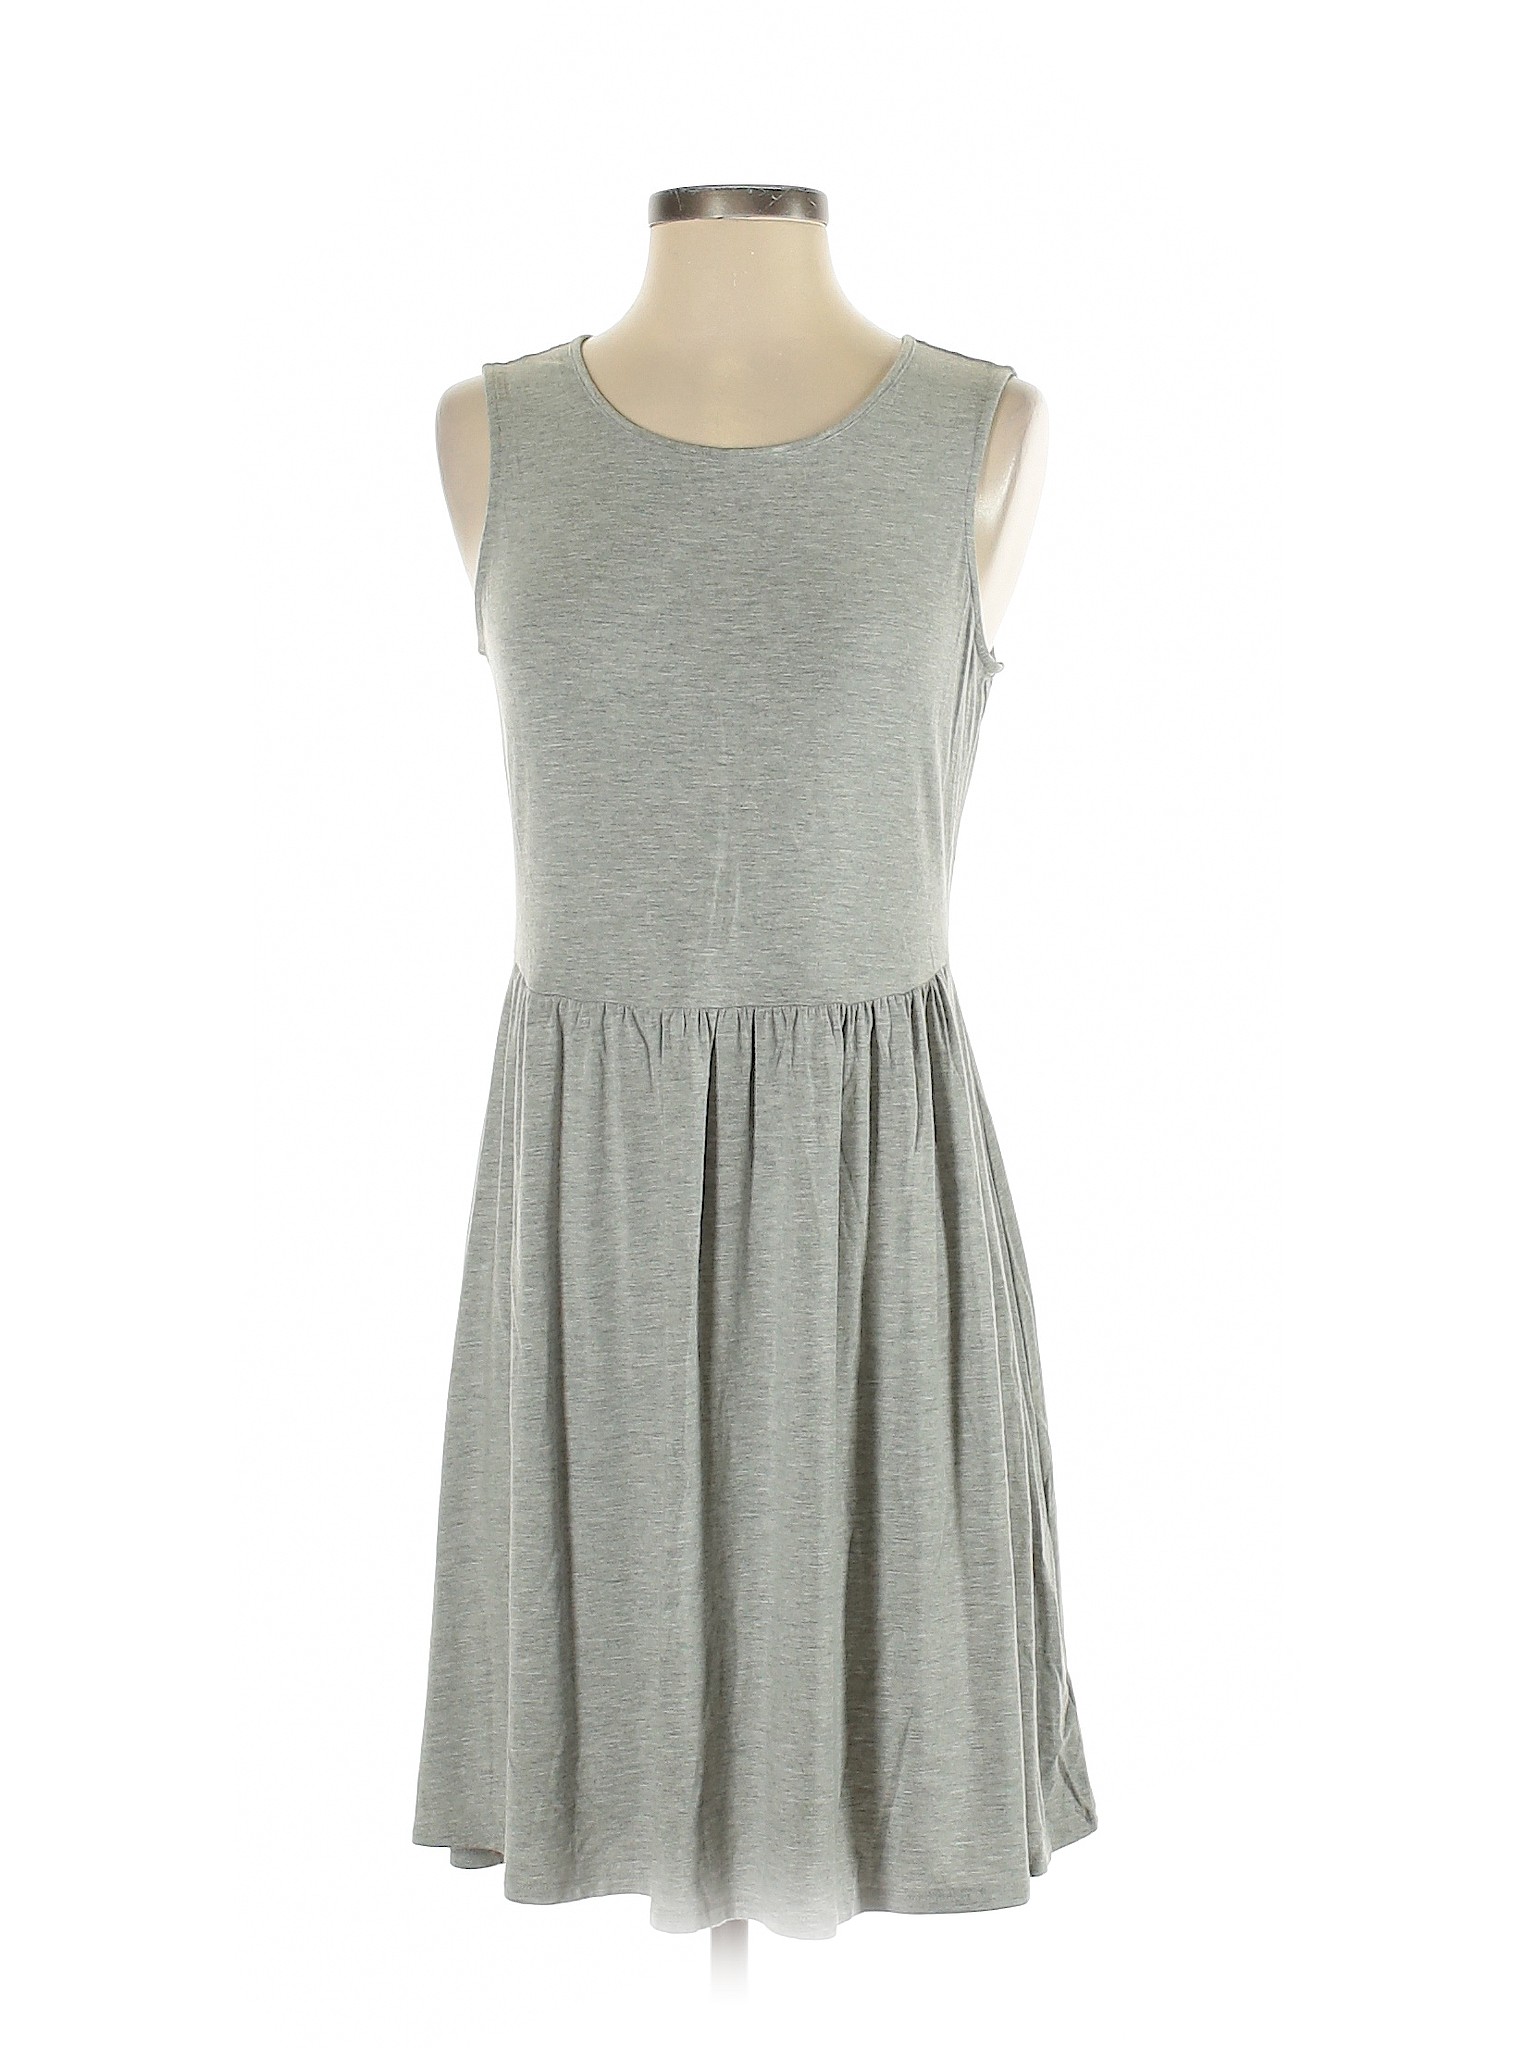 Old Navy Women Gray Casual Dress S | eBay